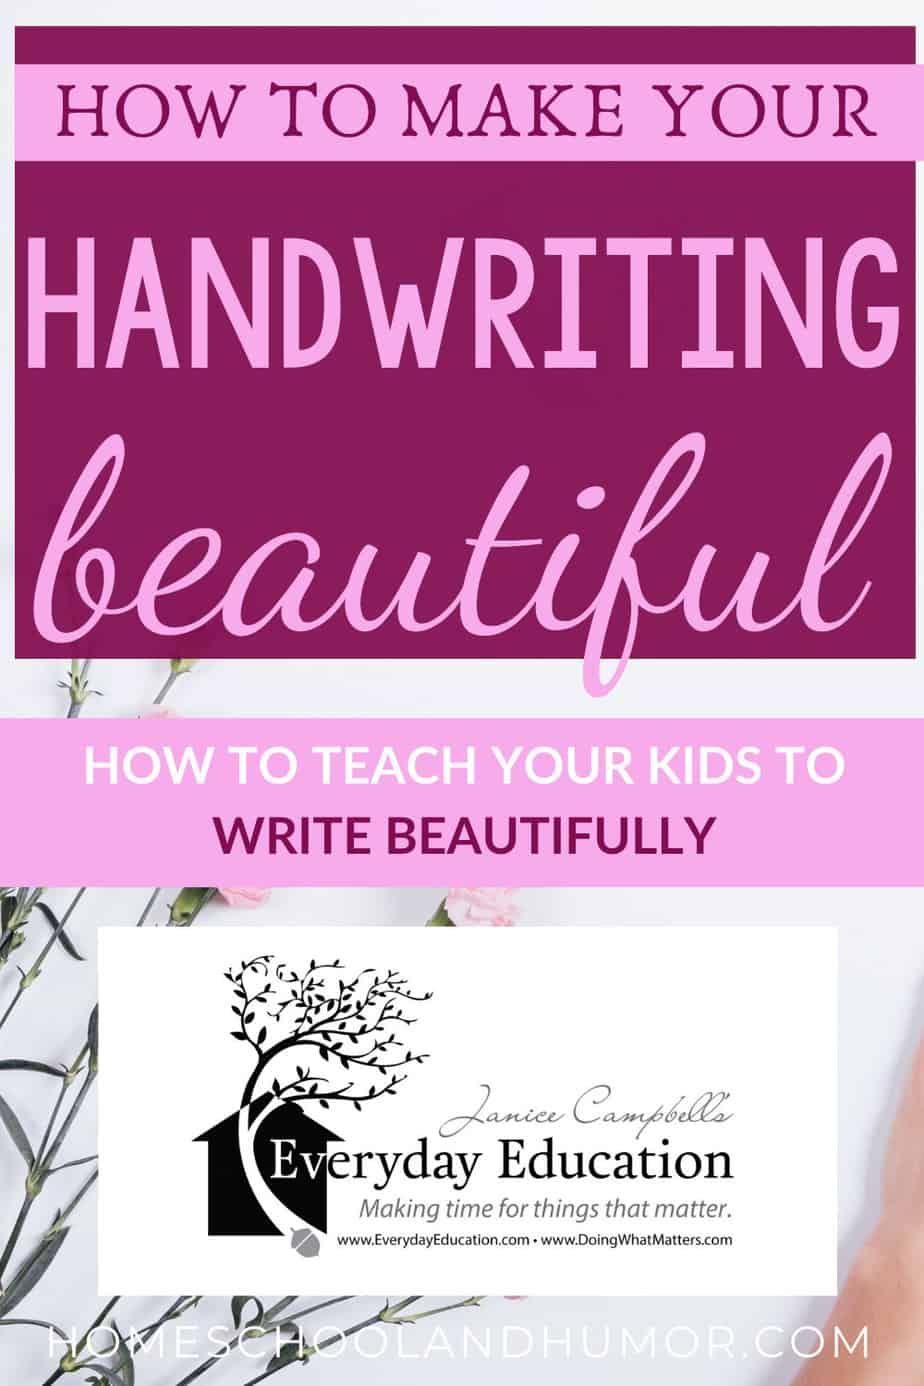 How To Make Your Handwriting Beautiful